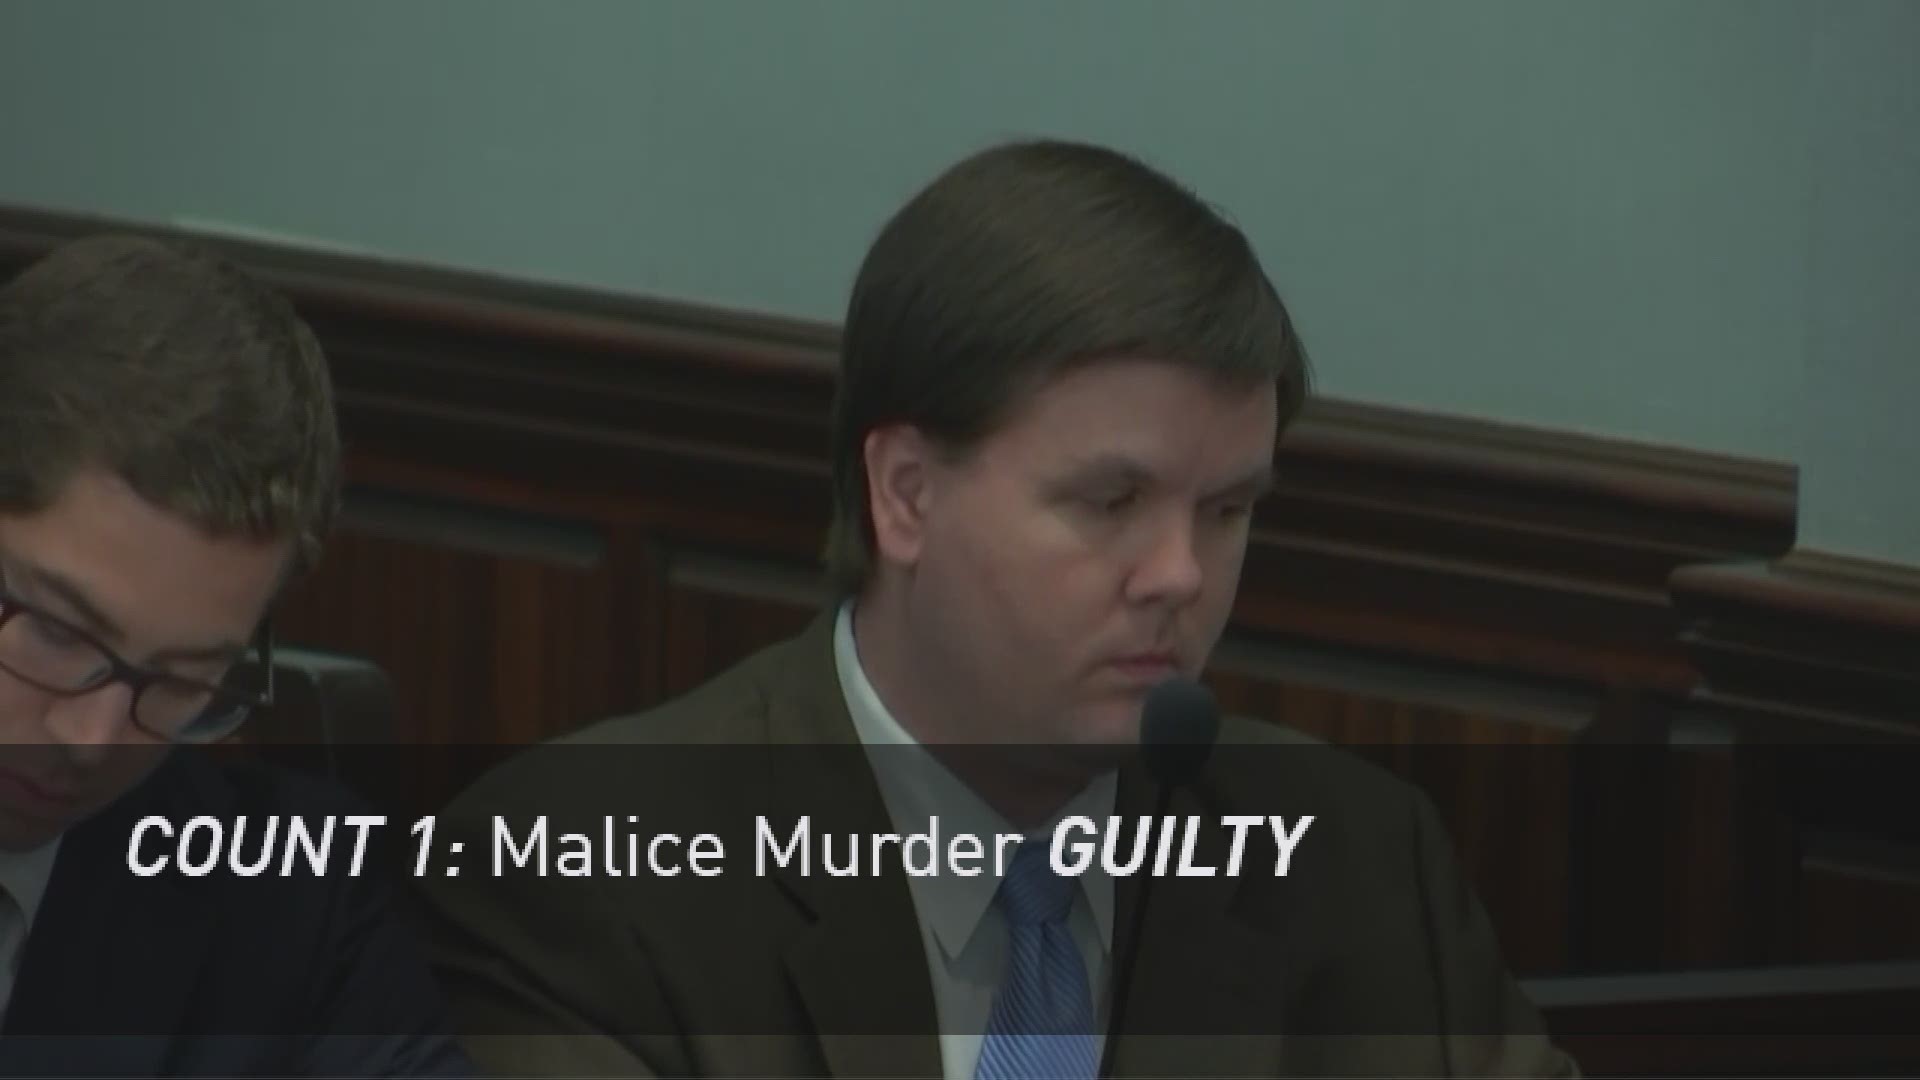 WATCH Ross Harris's reaction as guilty verdict is read